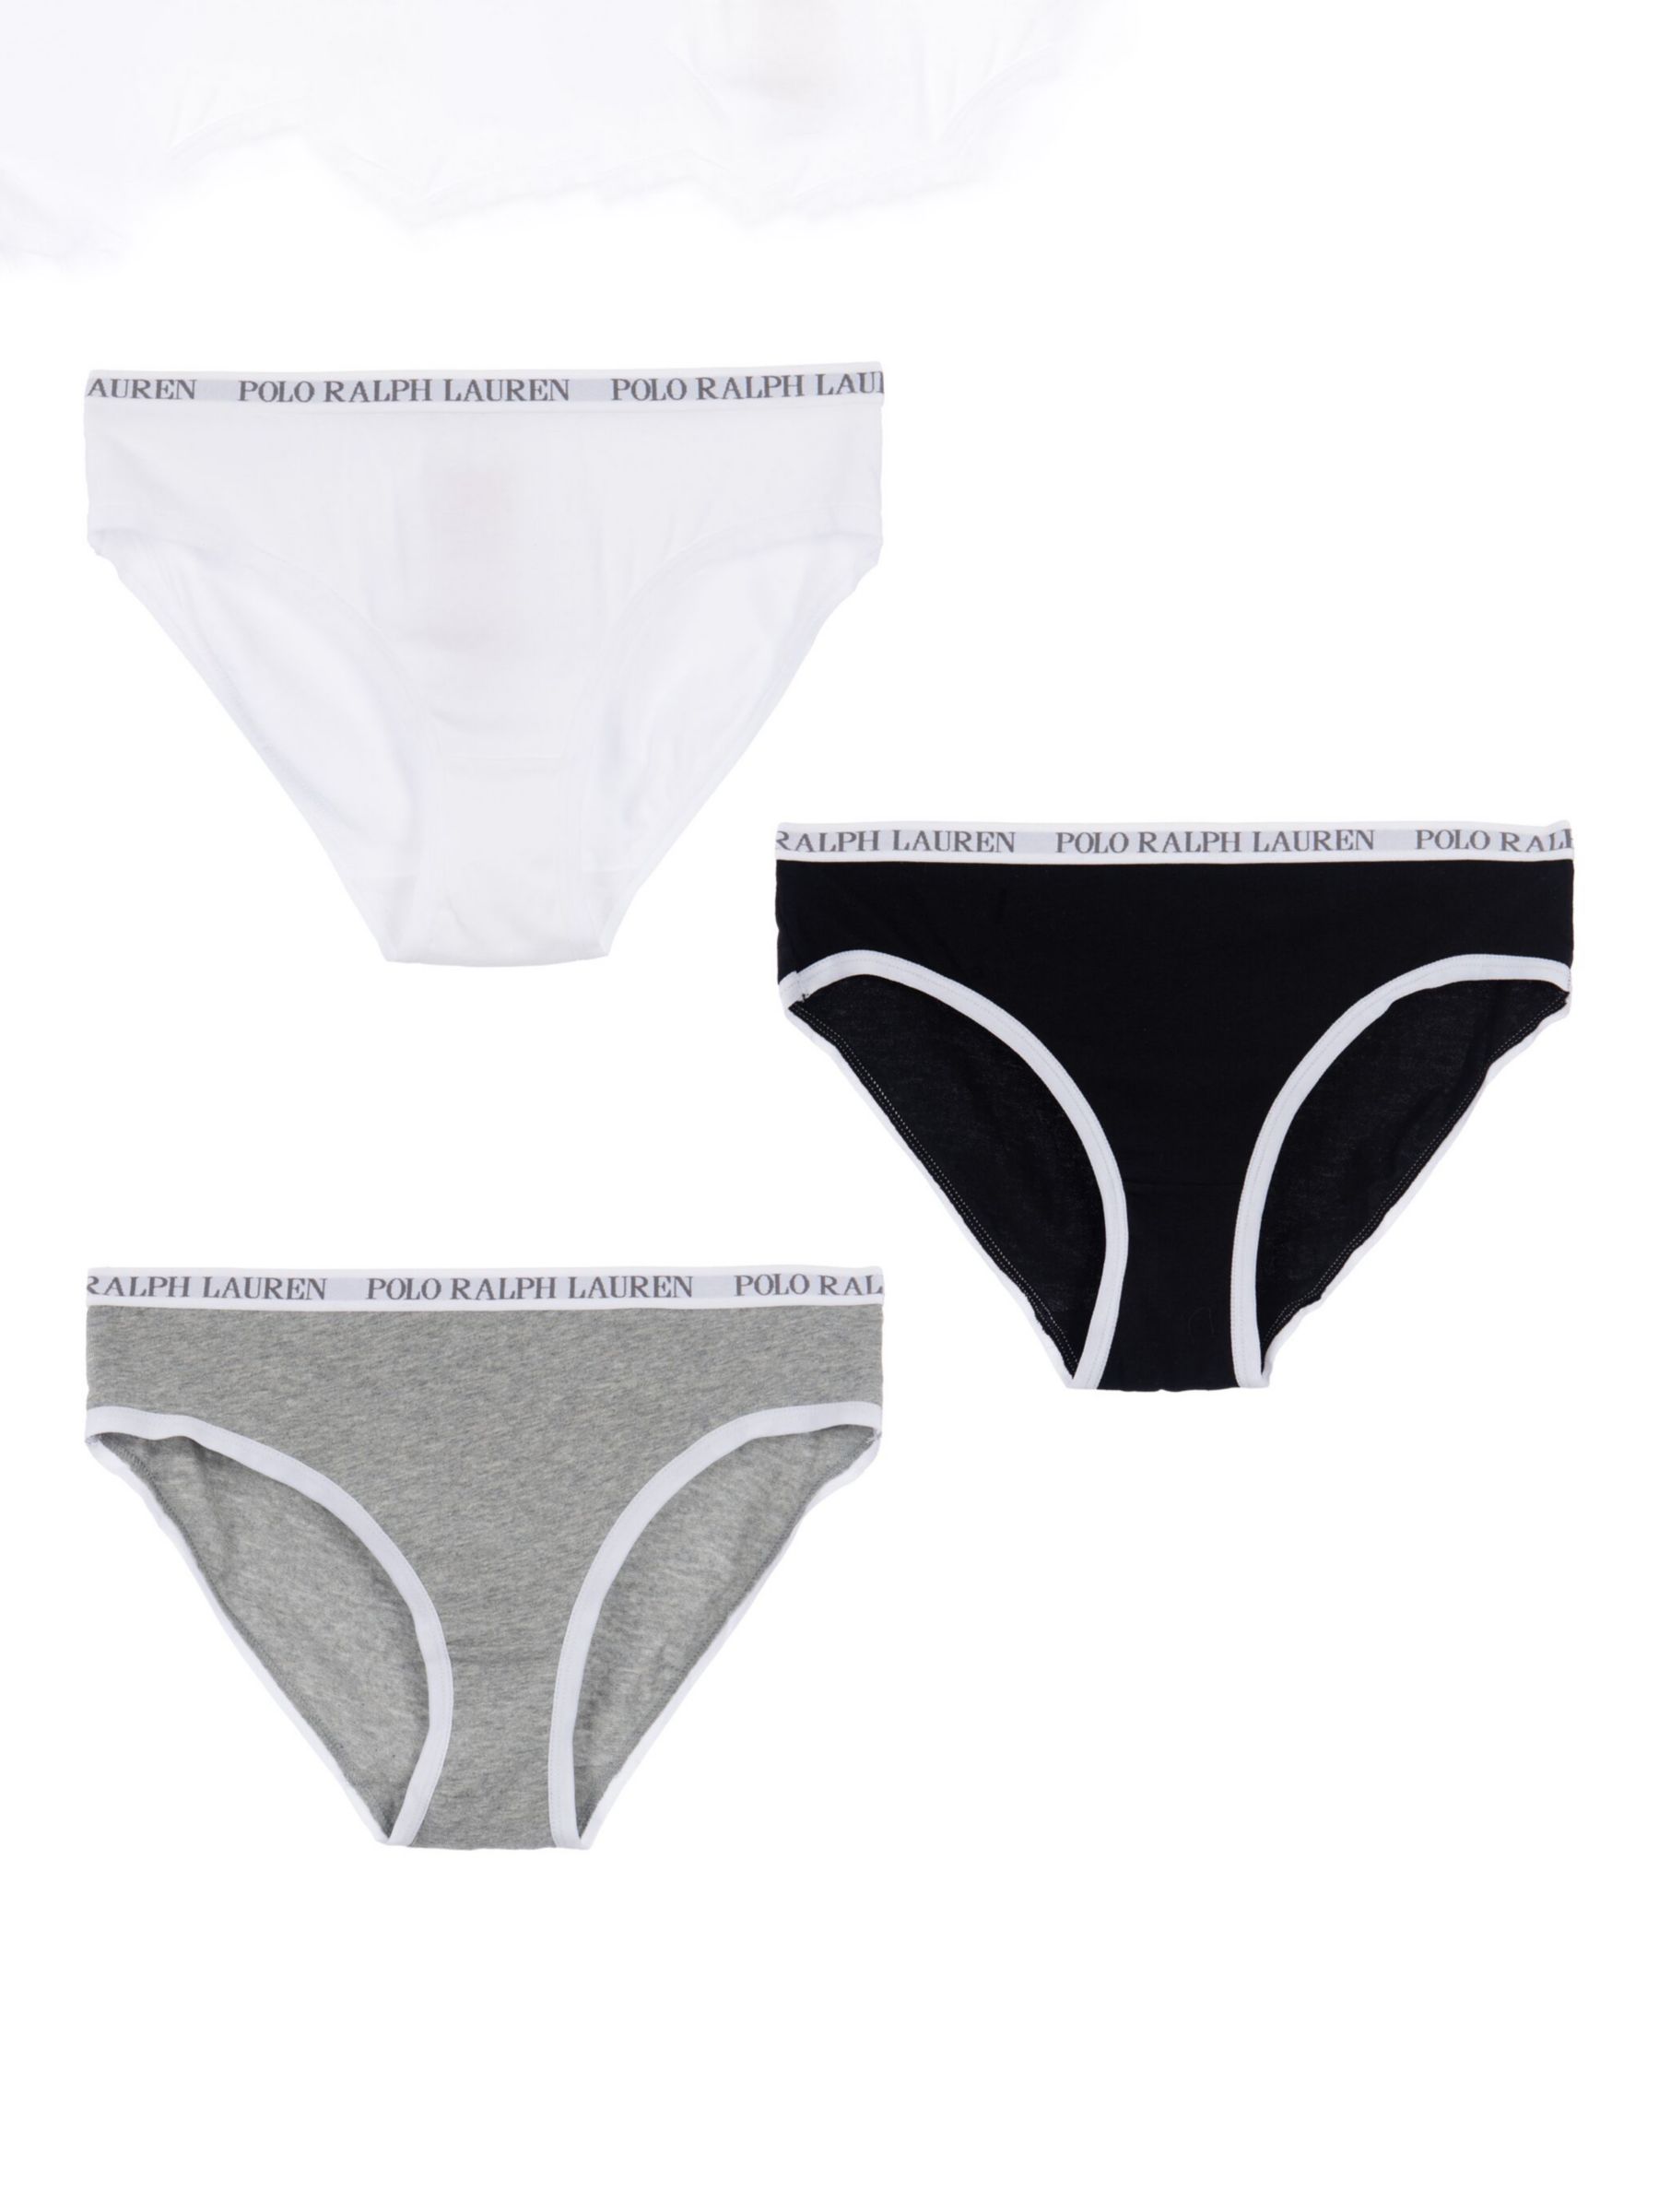 Polo Ralph Lauren Kids' Logo Solid Bikini Briefs, Pack of 3, White/Black/Grey, XL